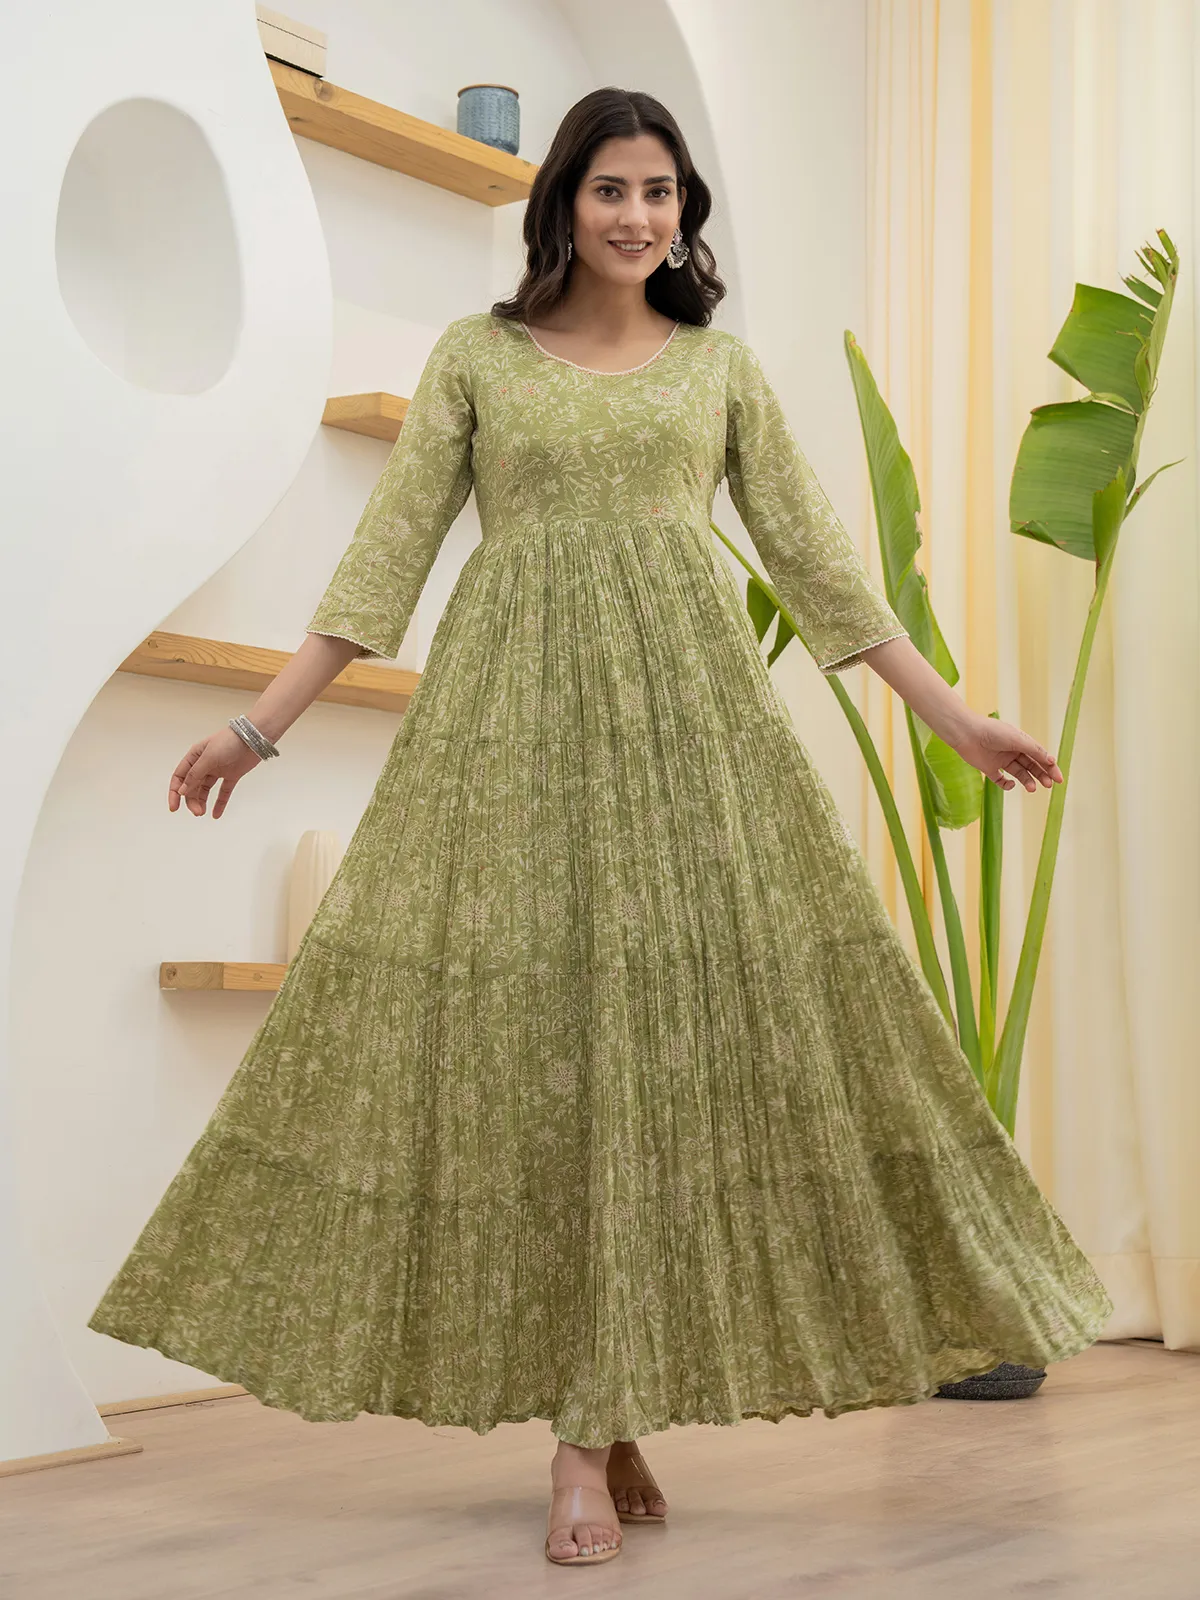 Trendy green printed long kurti in cotton